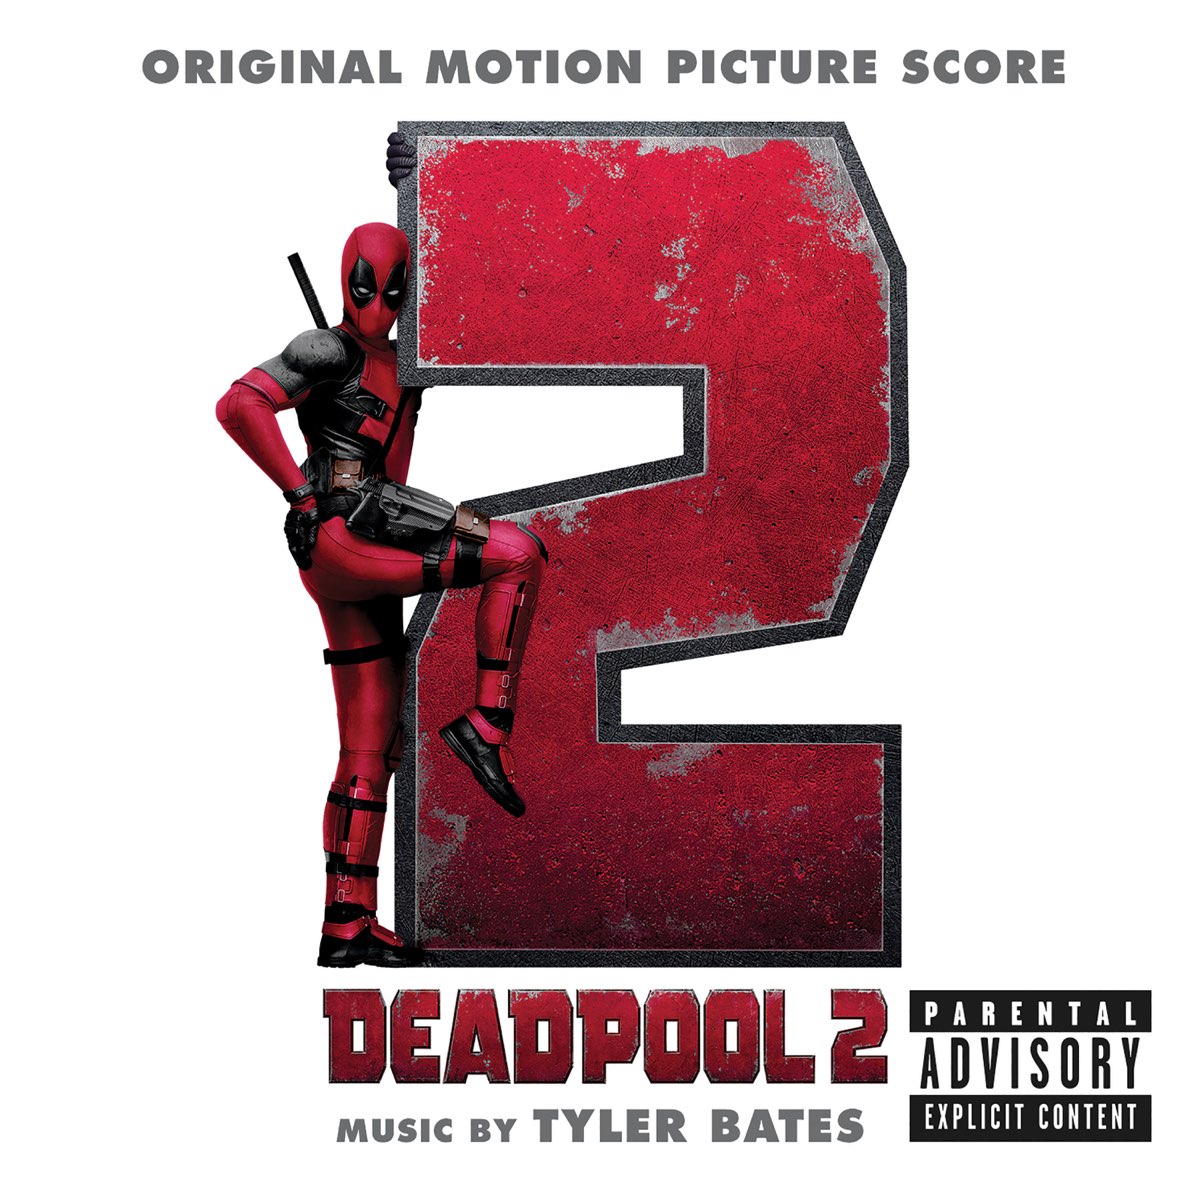 Deadpool 2 (Original Motion Picture Score) by Tyler Bates on Apple Music